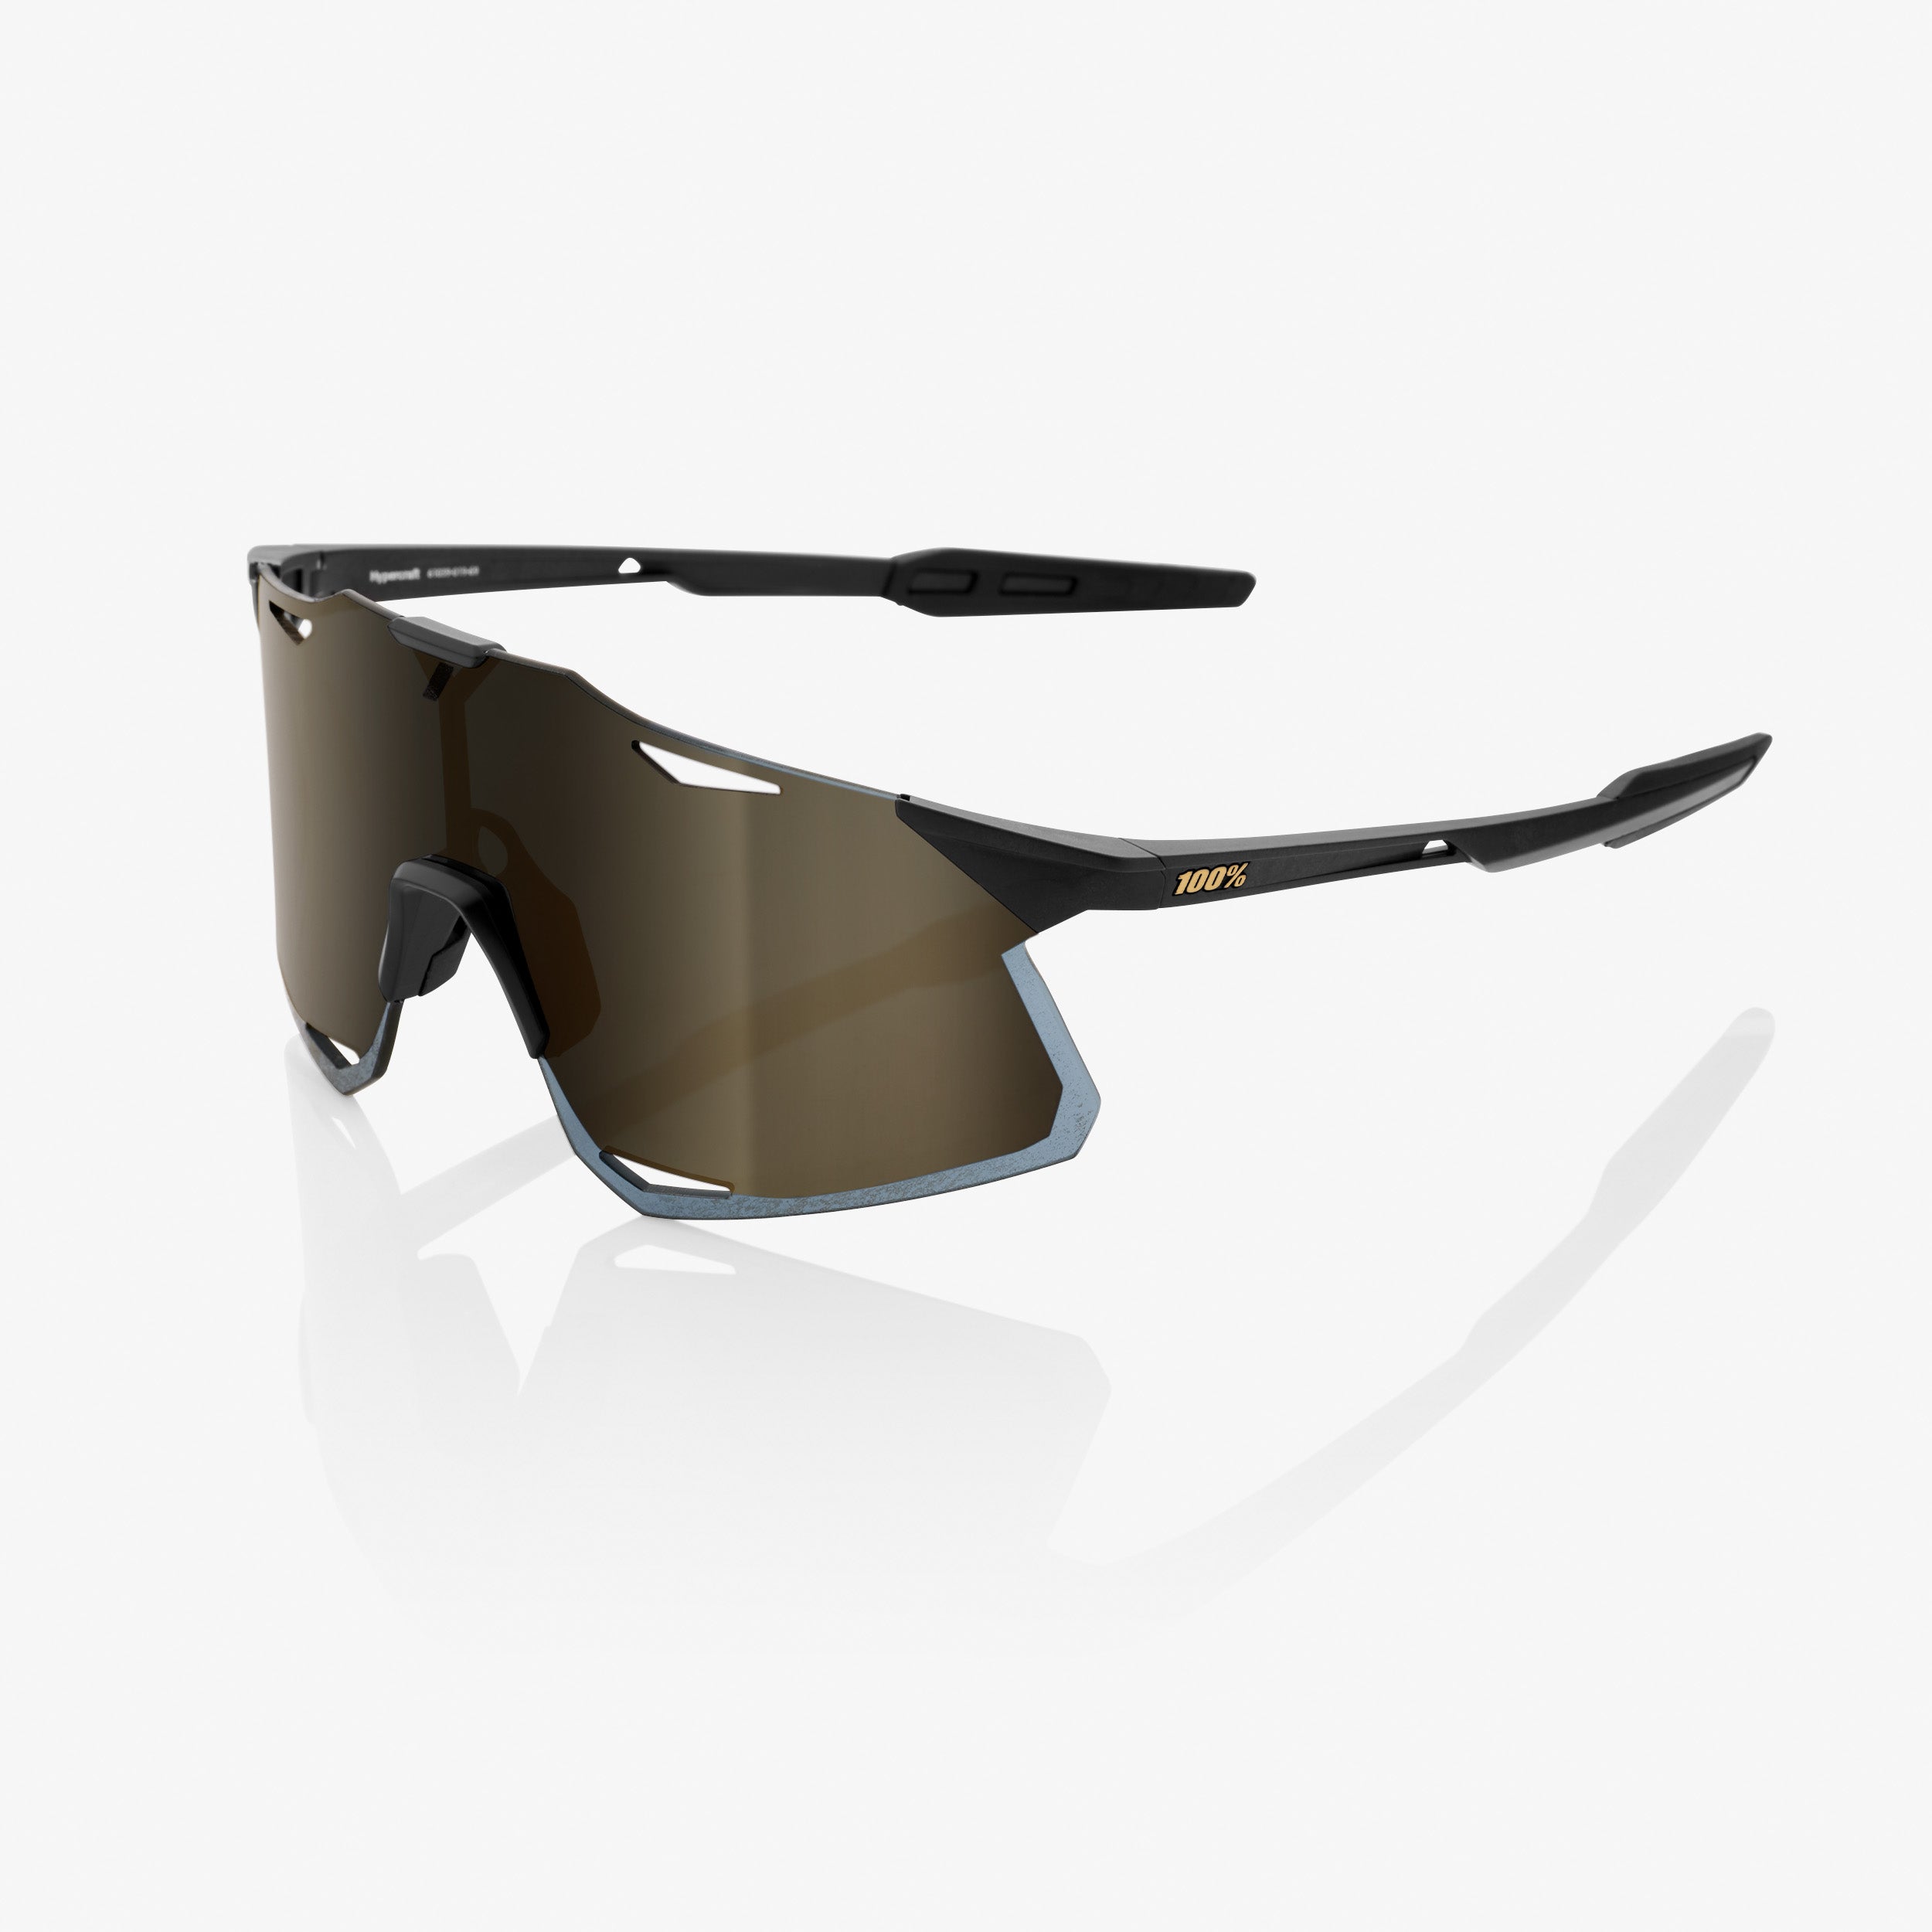 Hypercraft® - Sport Performance Sunglasses | Ride 100%